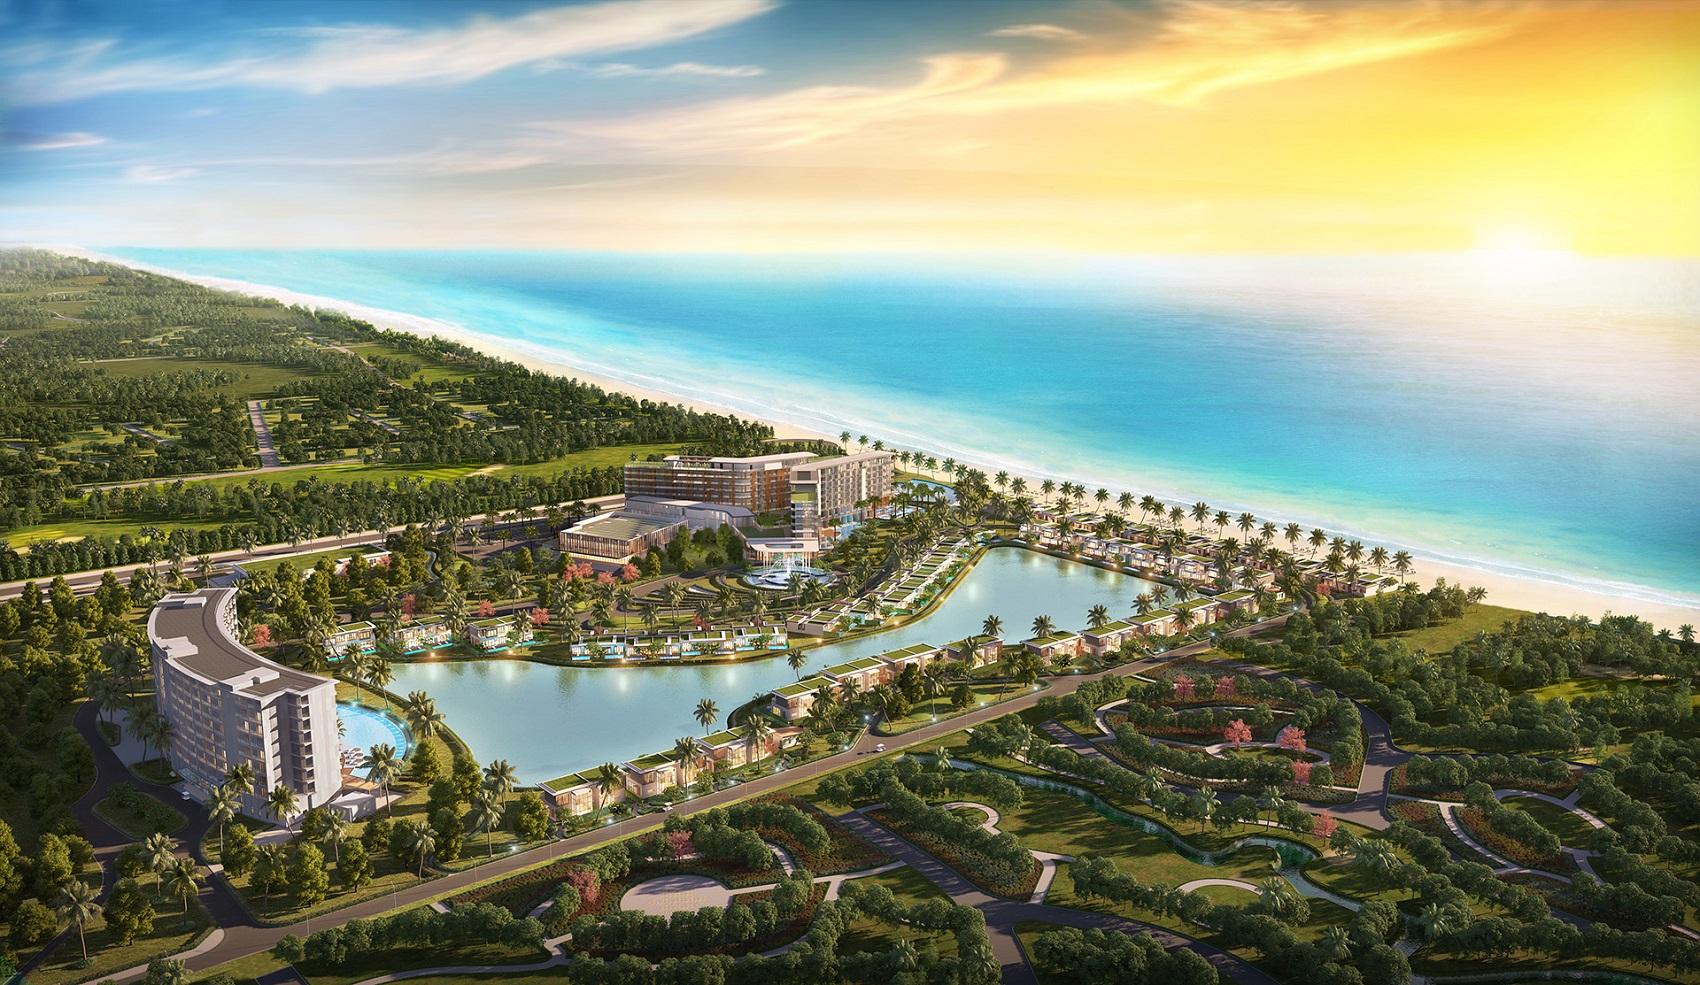 Sun Property ra mắt Felicity Phu Quoc managed by Mövenpick Hotels & Resorts - Ảnh 1.